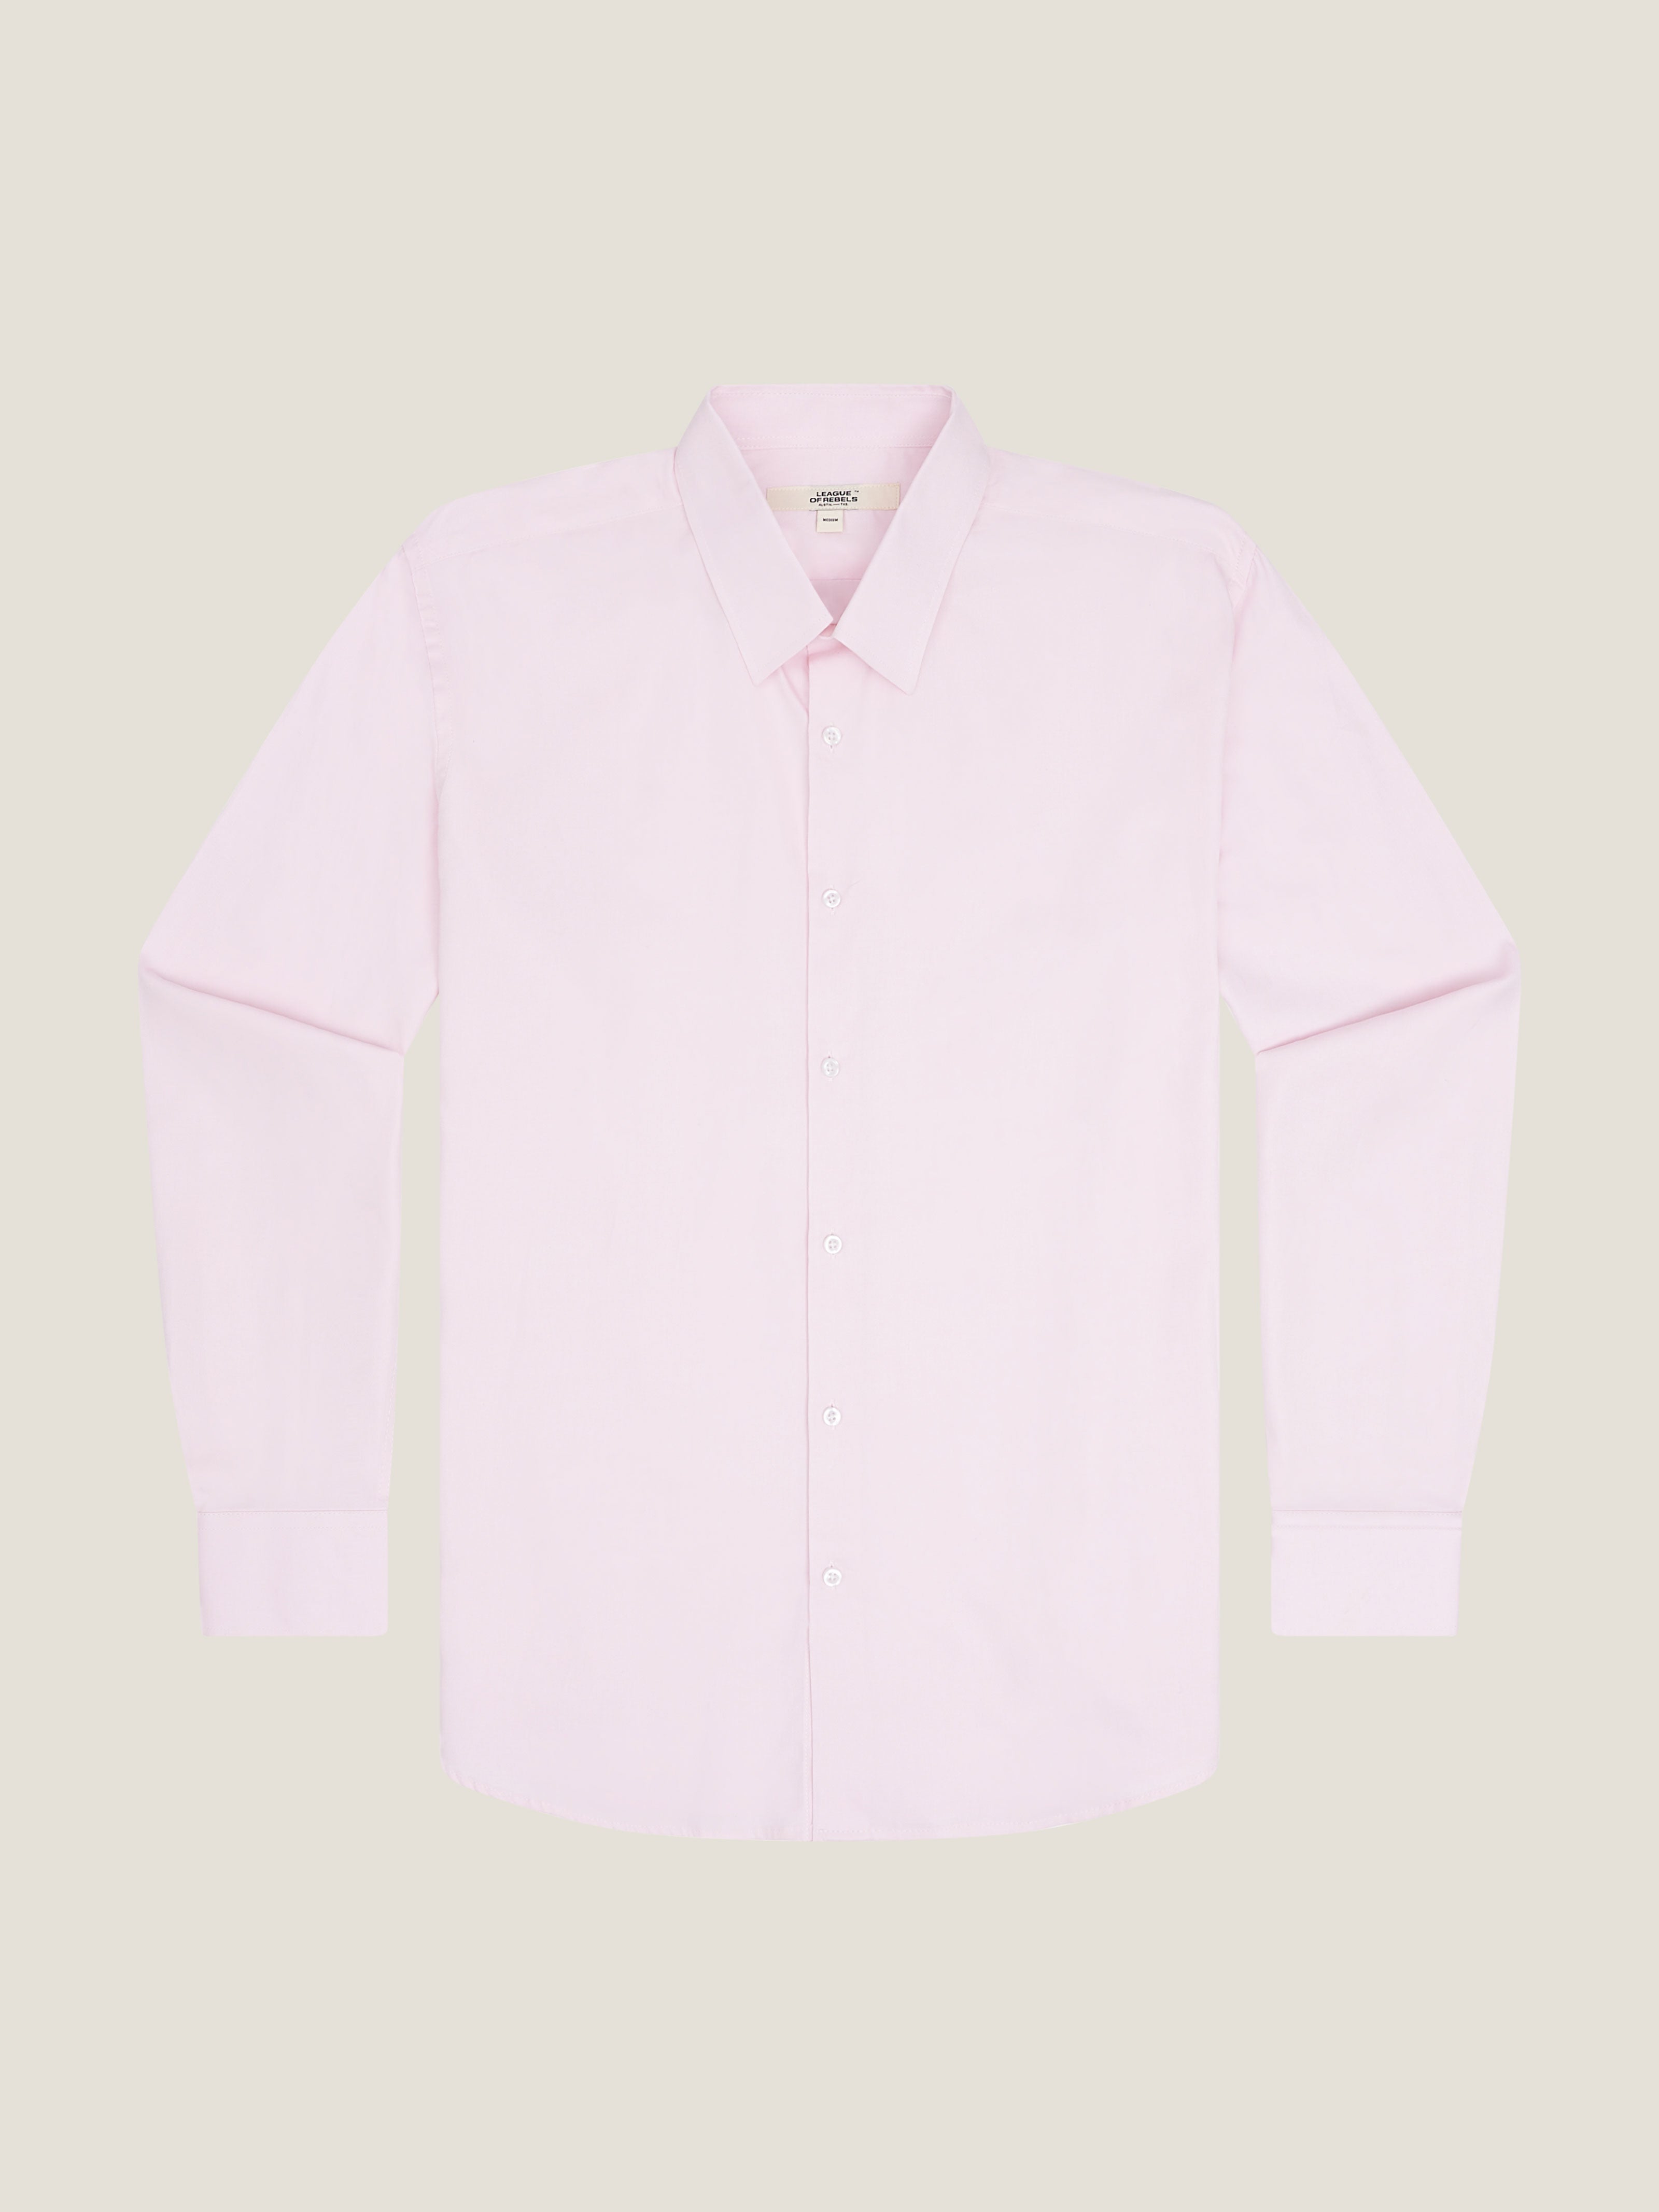 Allan Pink Shirt